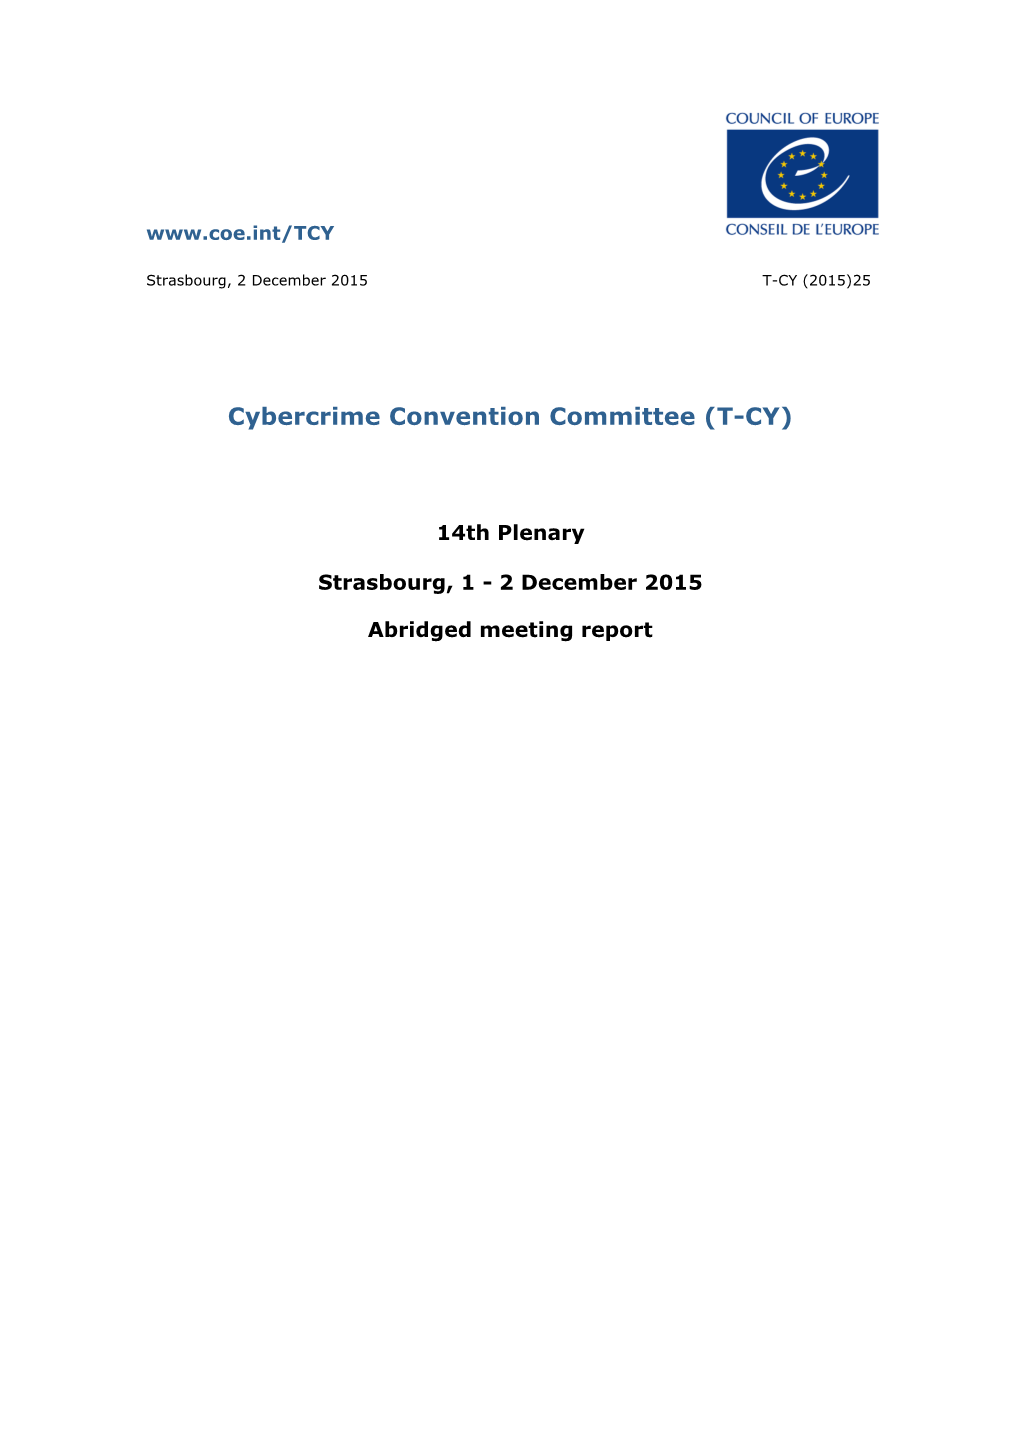 Abridged Meeting Report T-CY(2015)25 14Th Plenary/Abridged Meeting Report